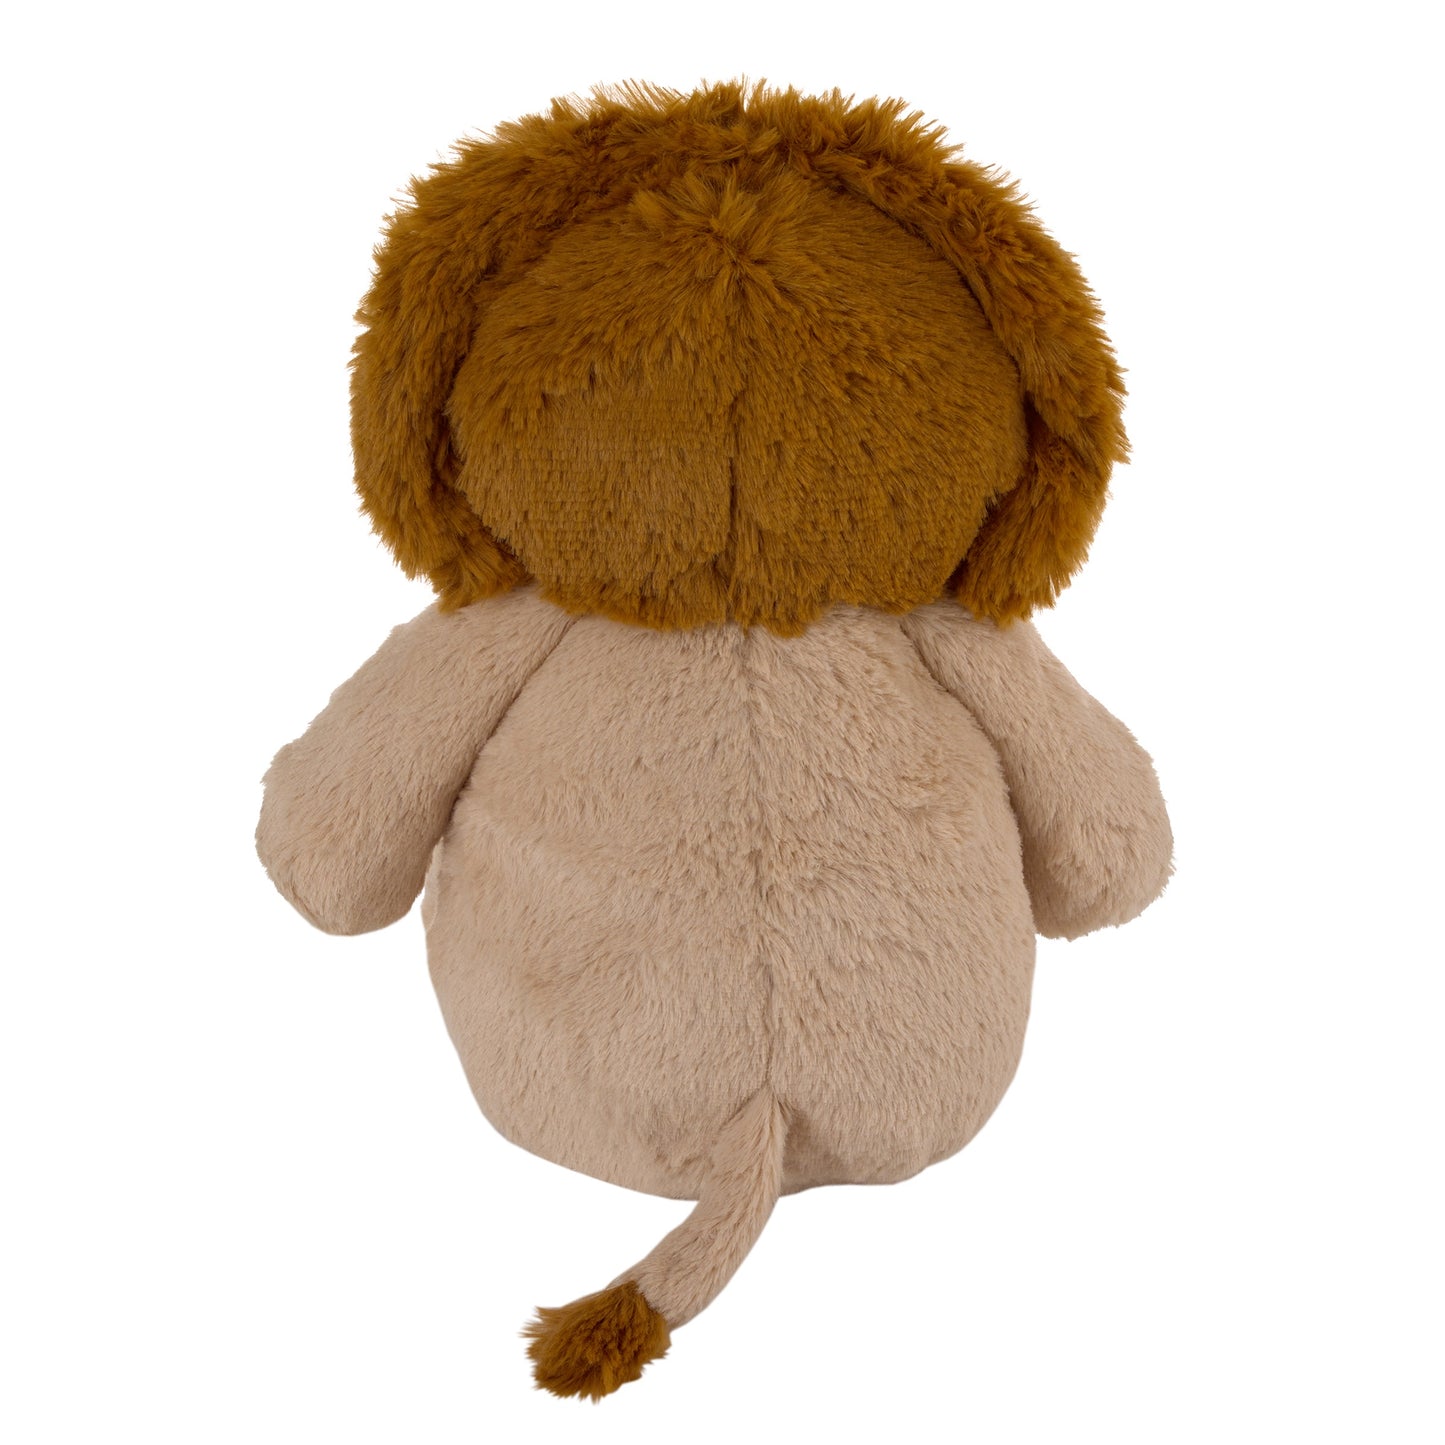 NoJo Tan Lion Super Soft Plush Stuffed Animal